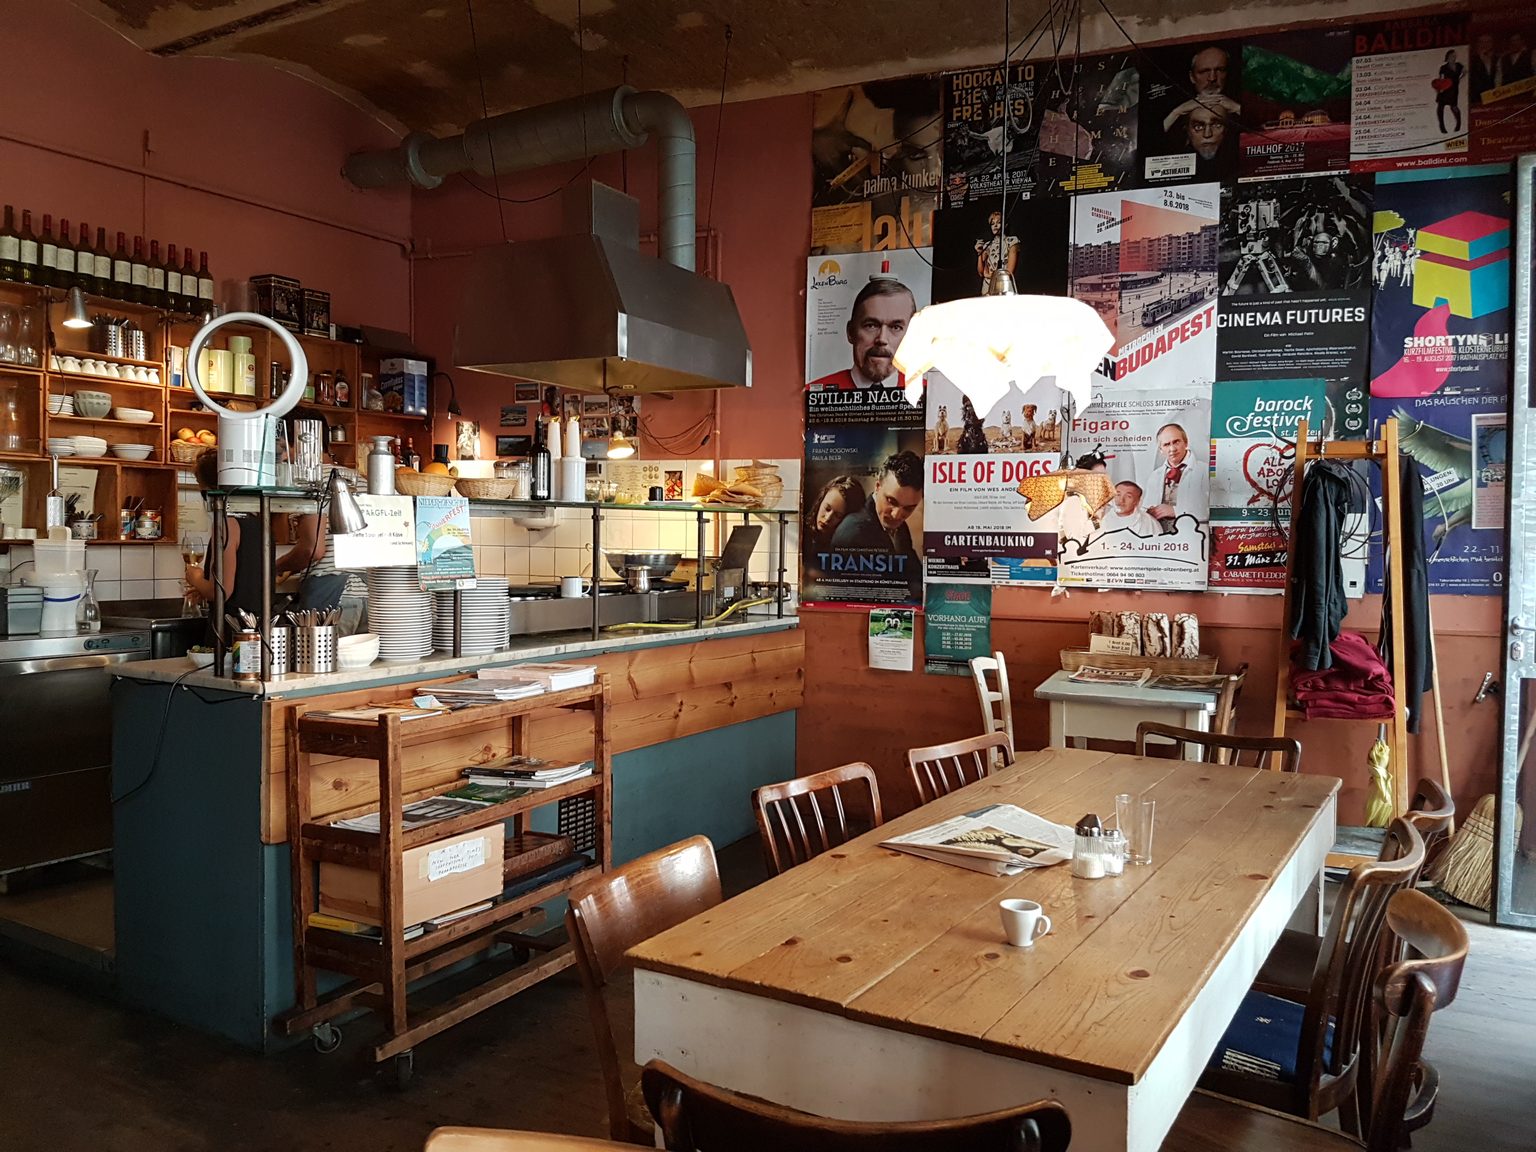 Café & Bar Barock